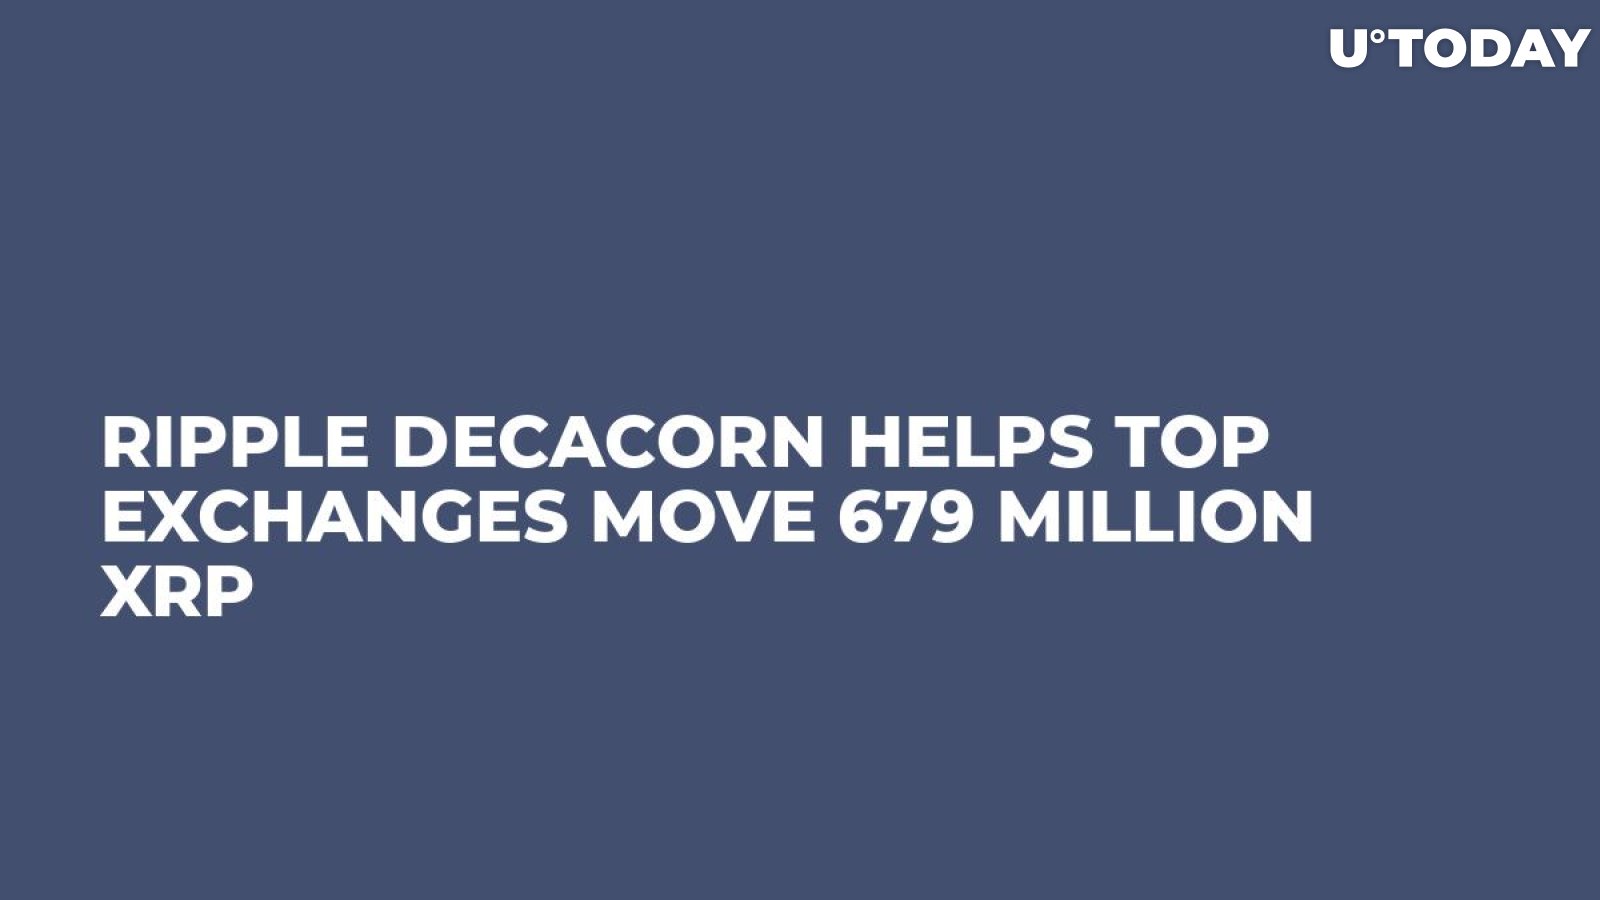 Ripple Decacorn Helps Top Exchanges Move 679 Million XRP